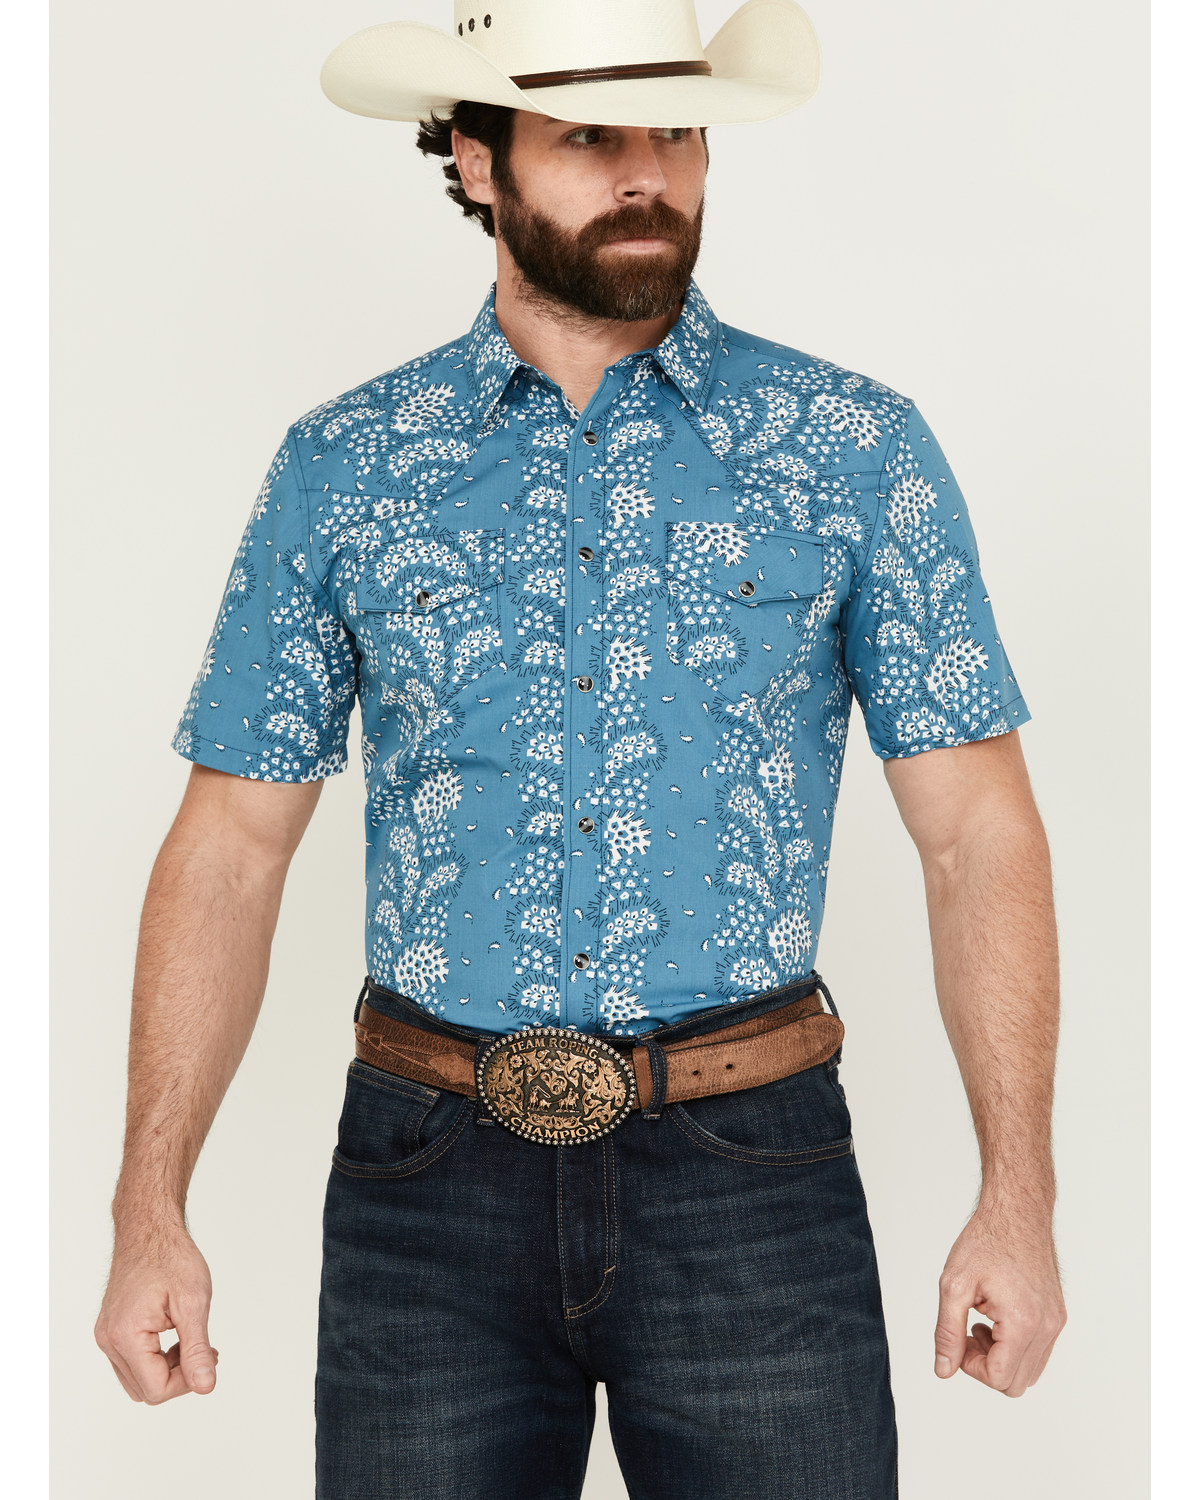 Gibson Men's Hayes Abstract Paisley Print Short Sleeve Snap Western Shirt